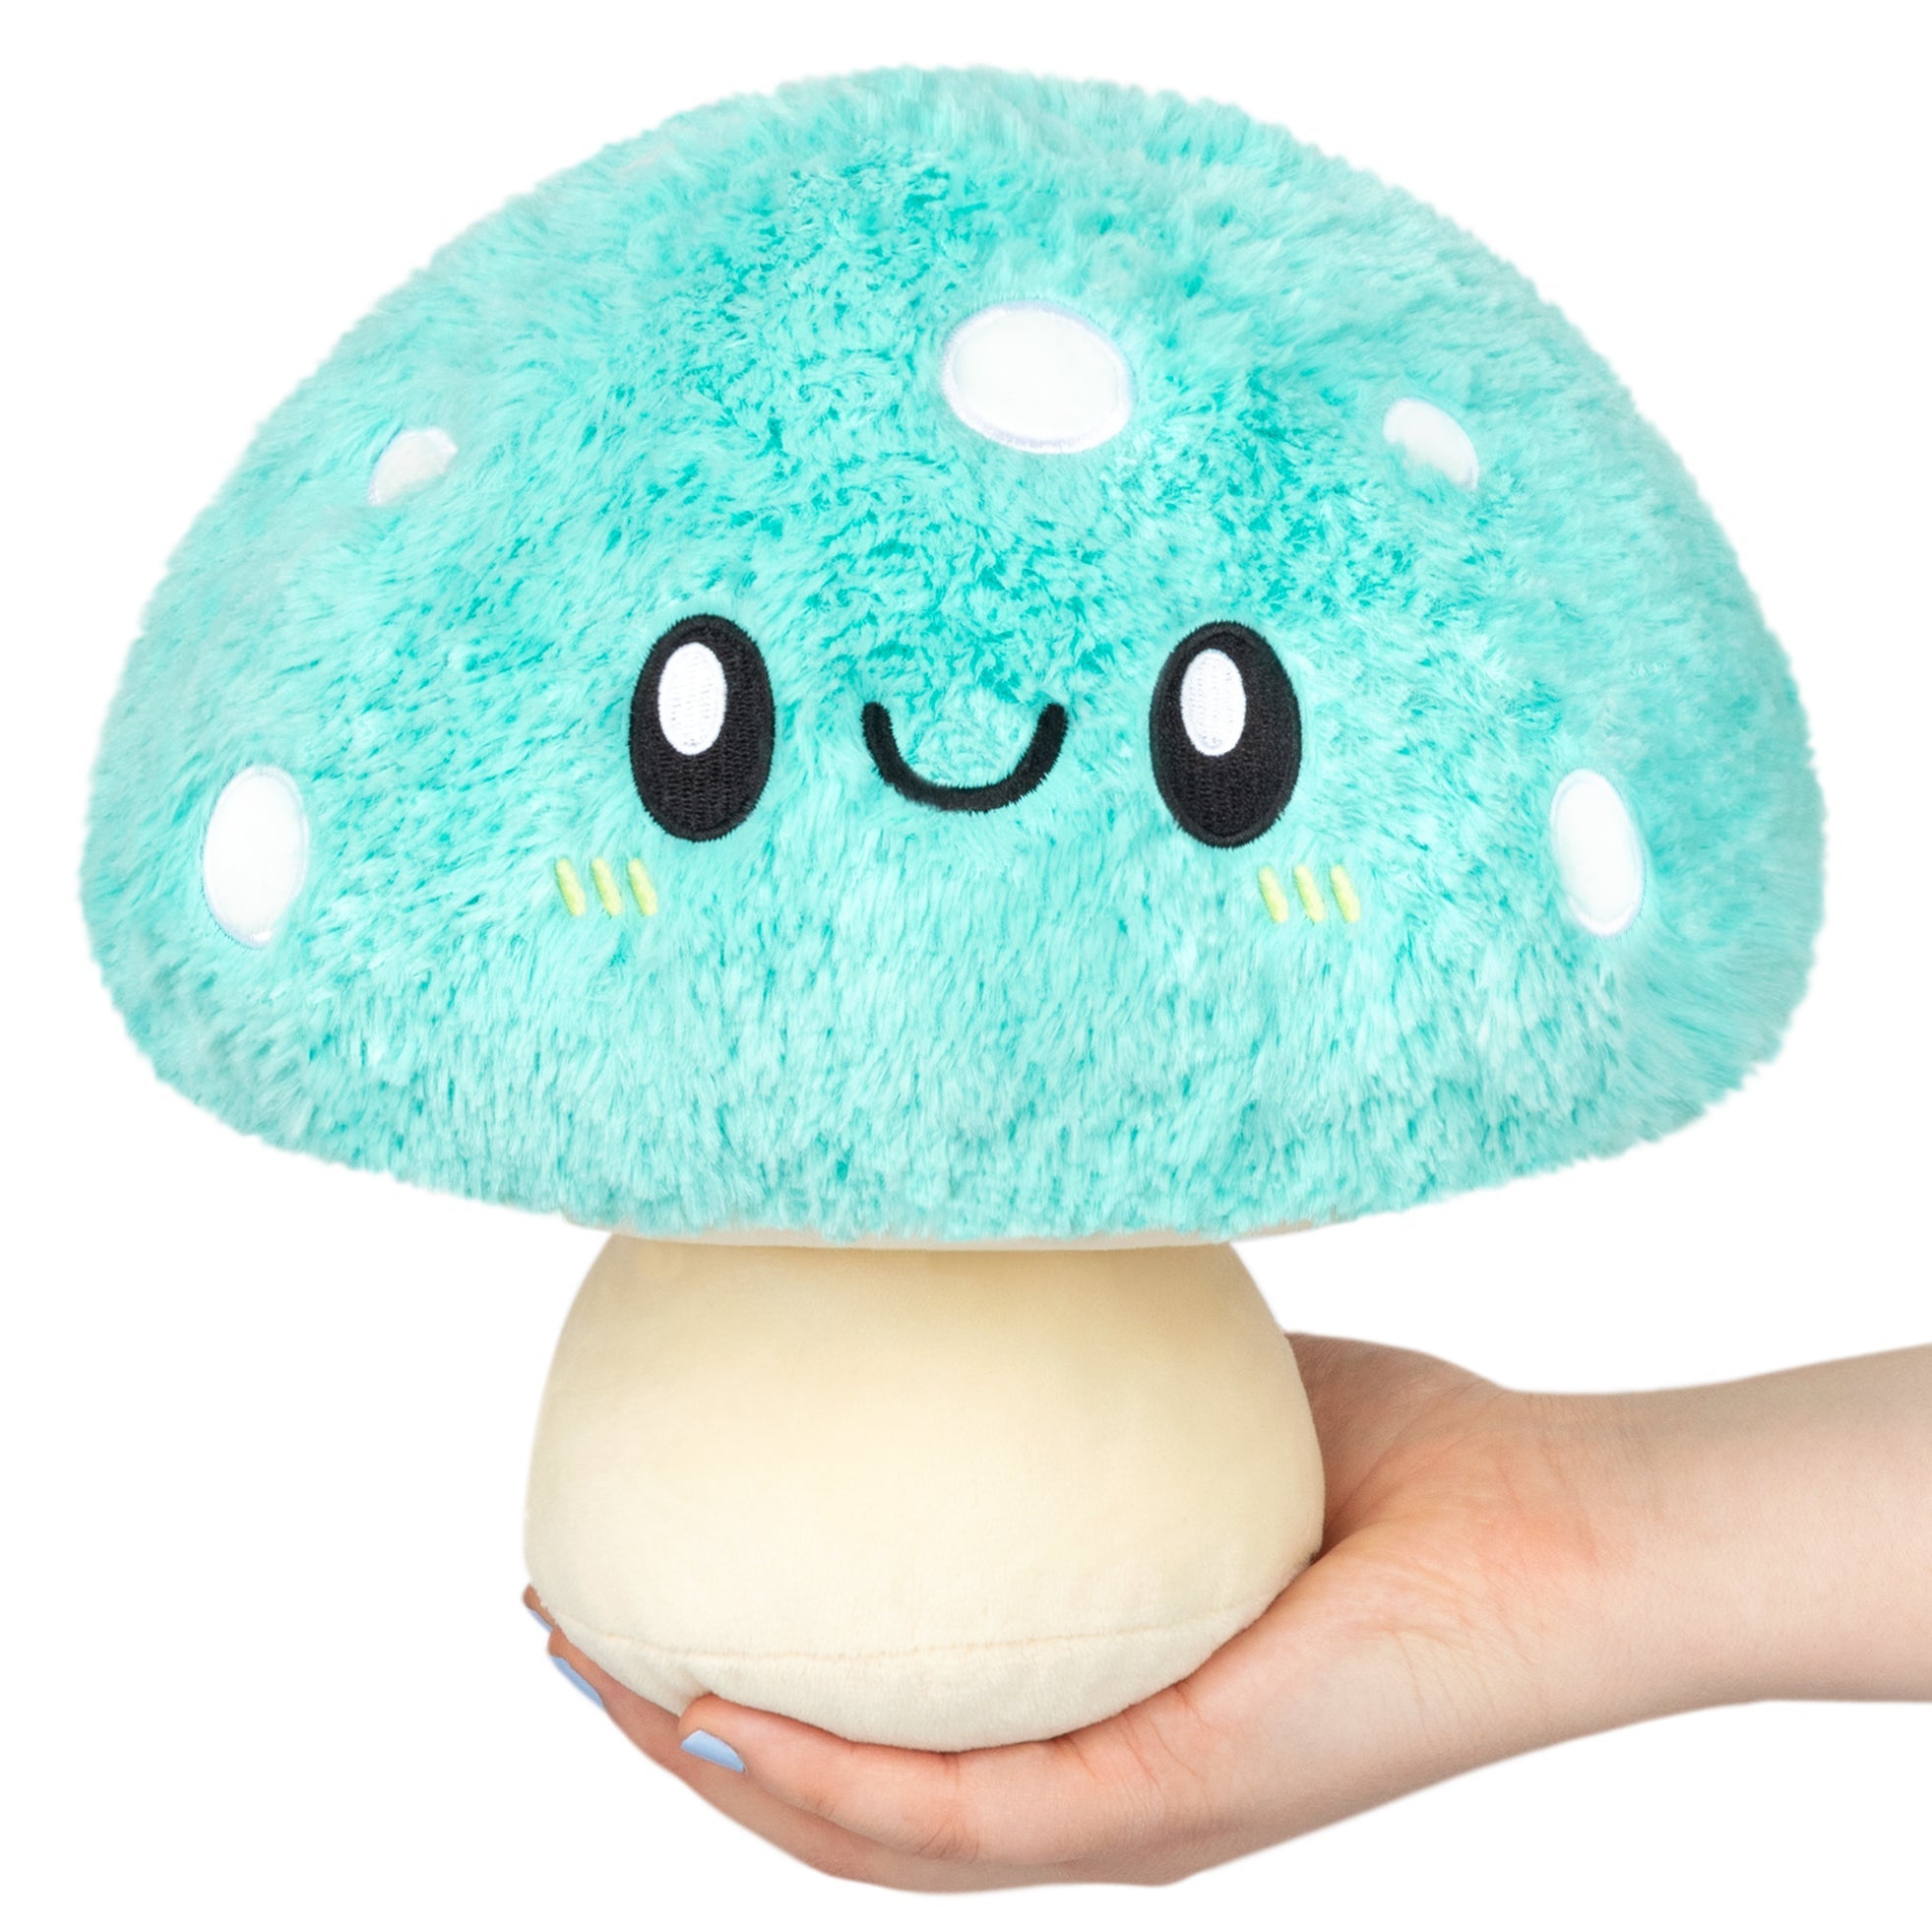 Mini Turquoise Mushroom by Squishable #SQU-117769